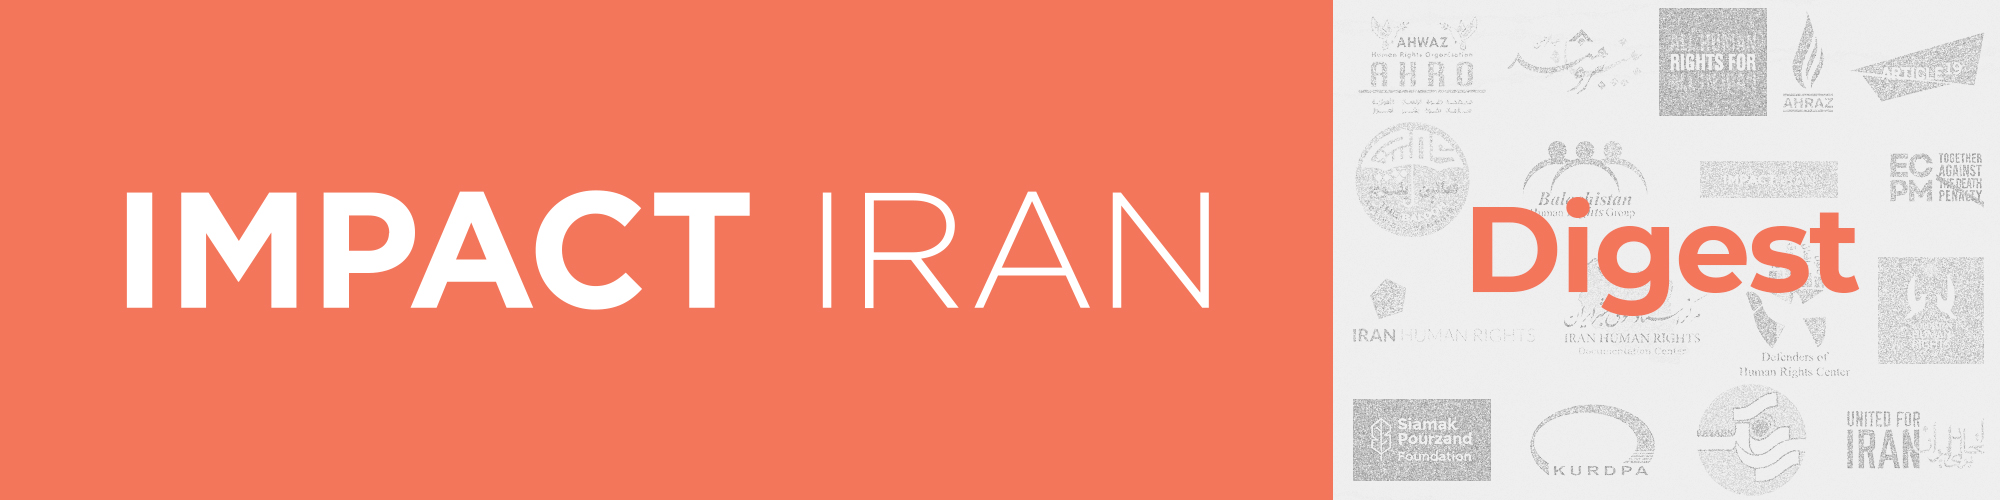 Impact Iran Digest